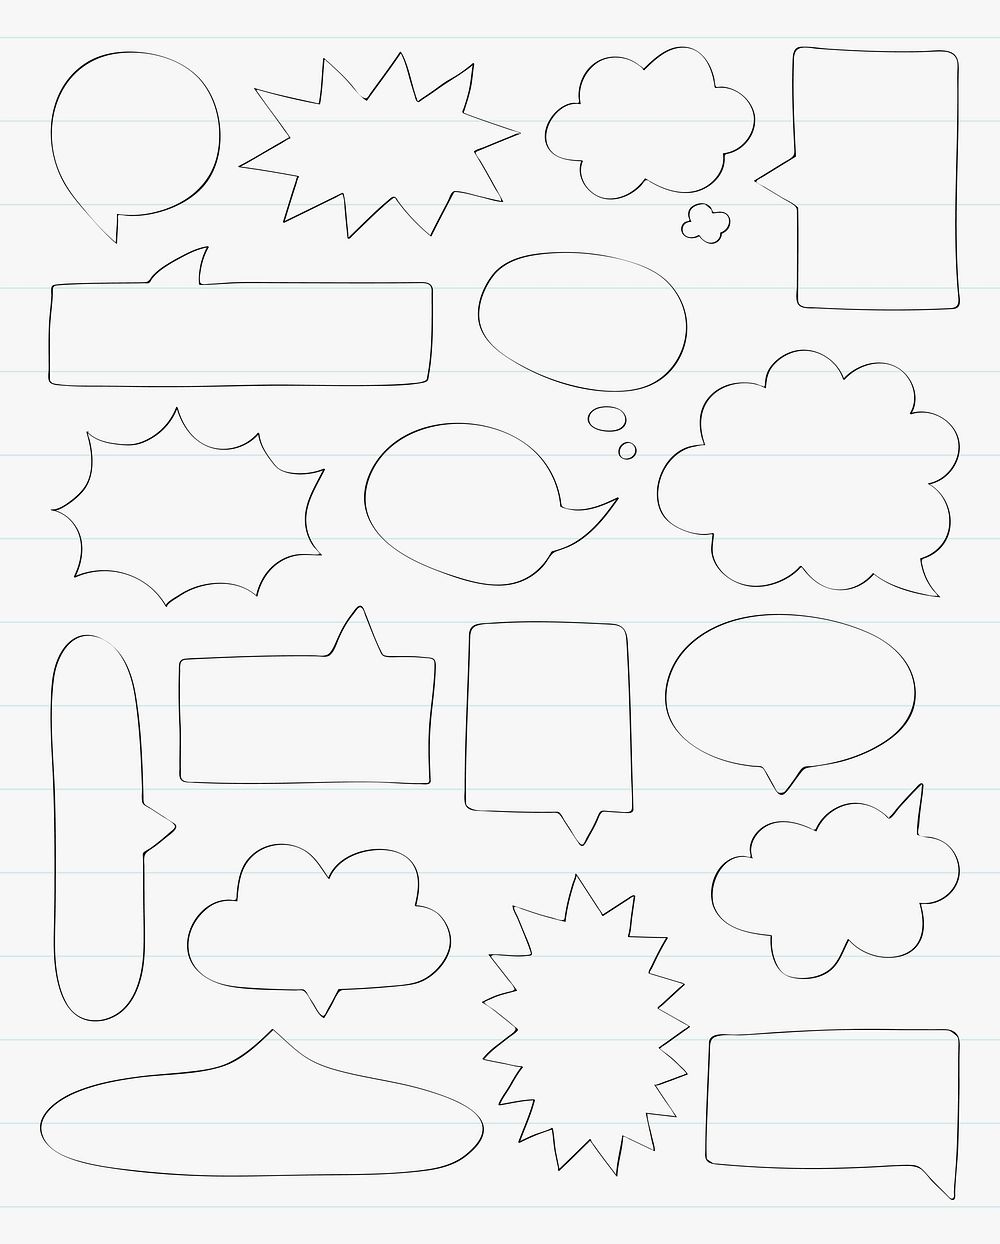 Speech bubble doodle vector collection